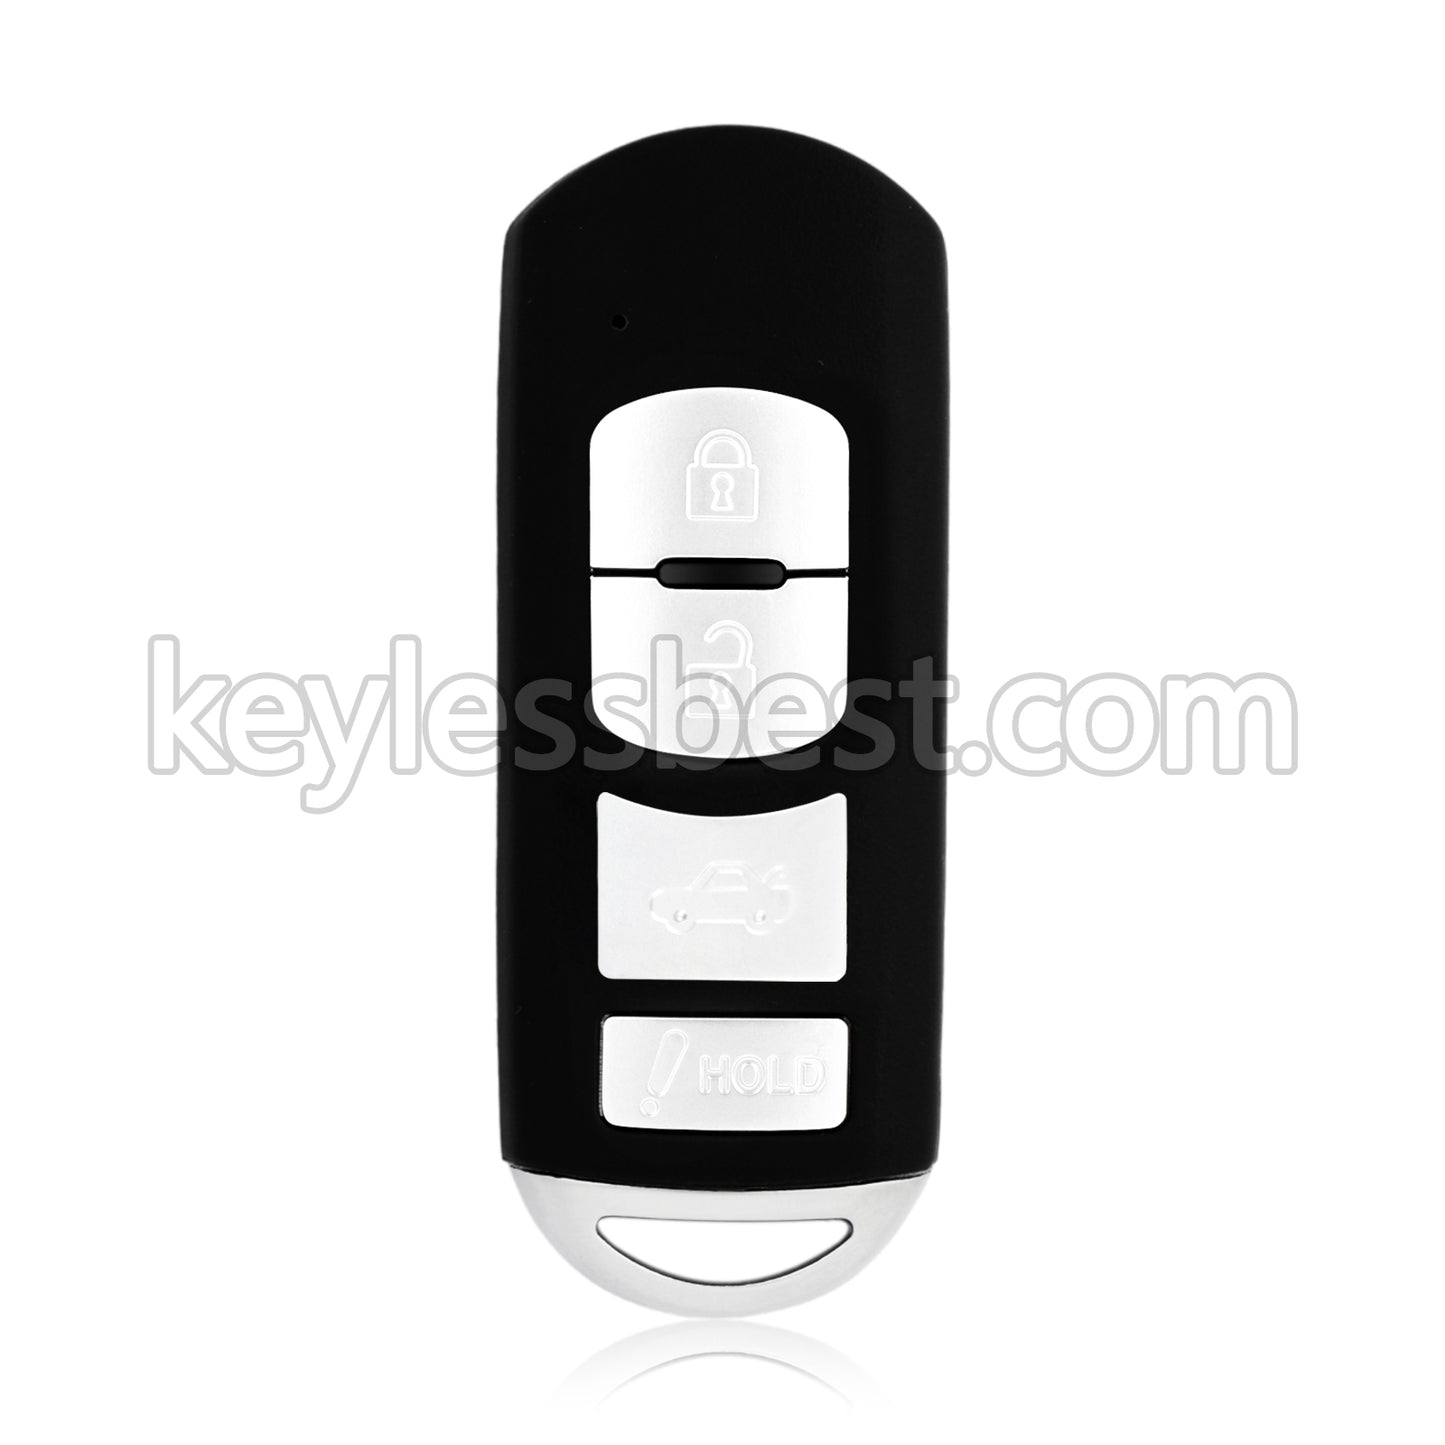 2017 - 2020 Toyota Yaris iA / 4 Buttons Remote Key / WAZSKE13D01 WAZSKE13D02 / 315MHz